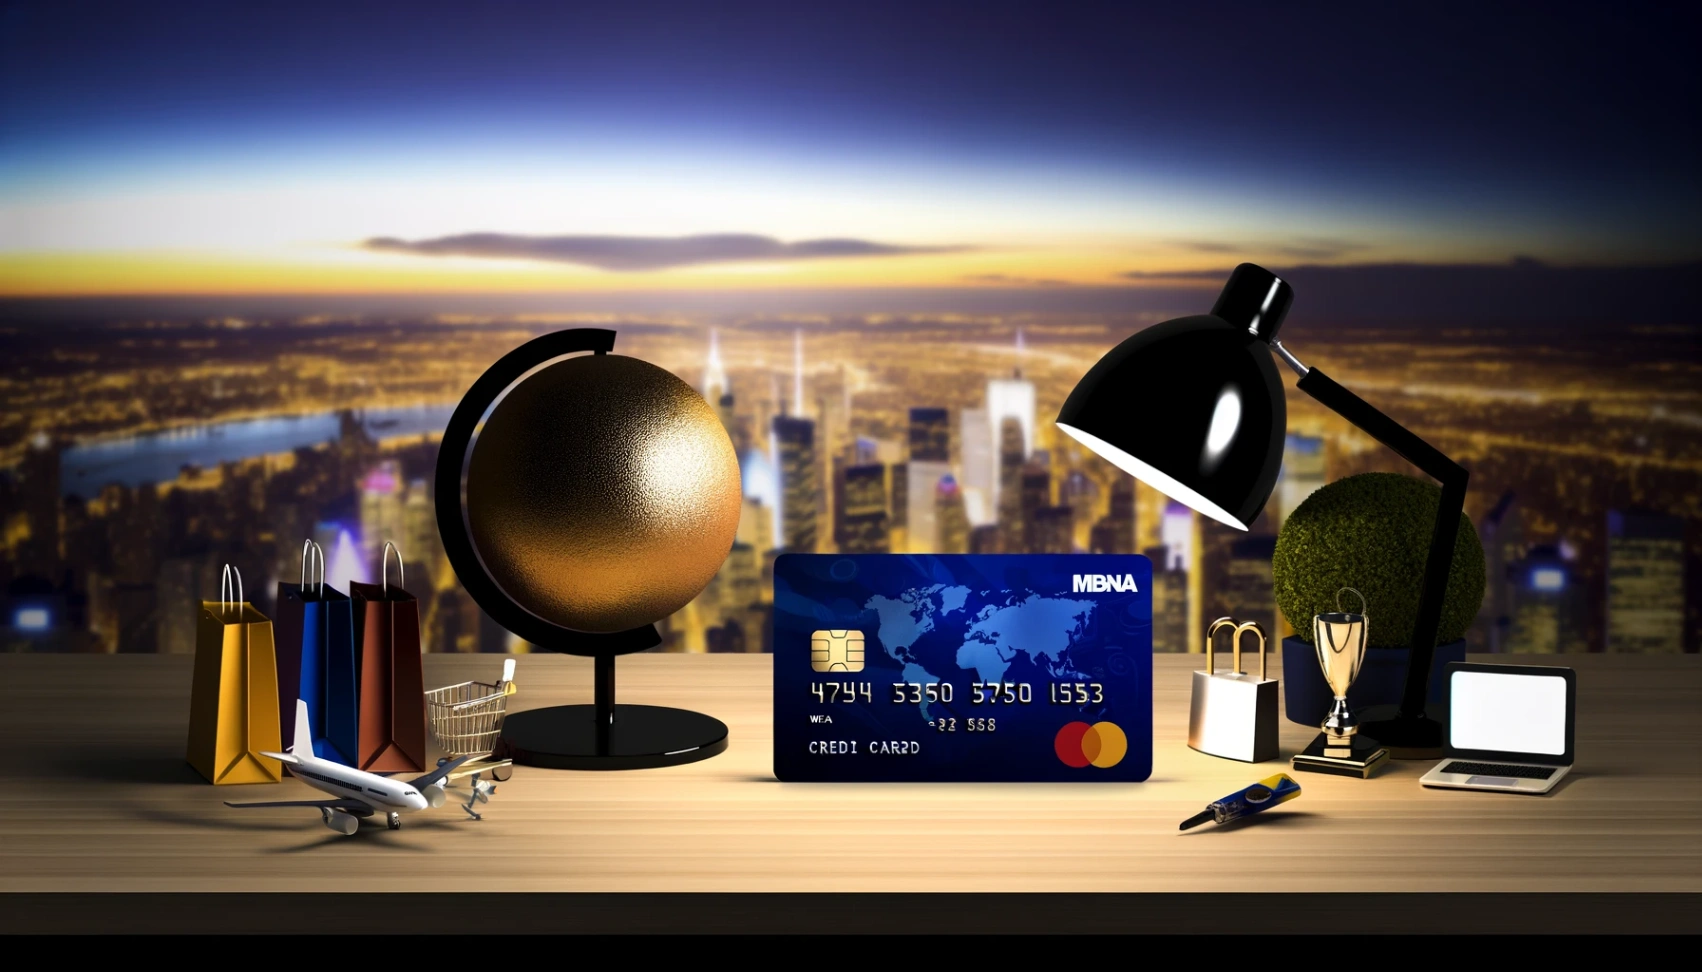 Online Application for MBNA Credit Card - A Comprehensive Guide